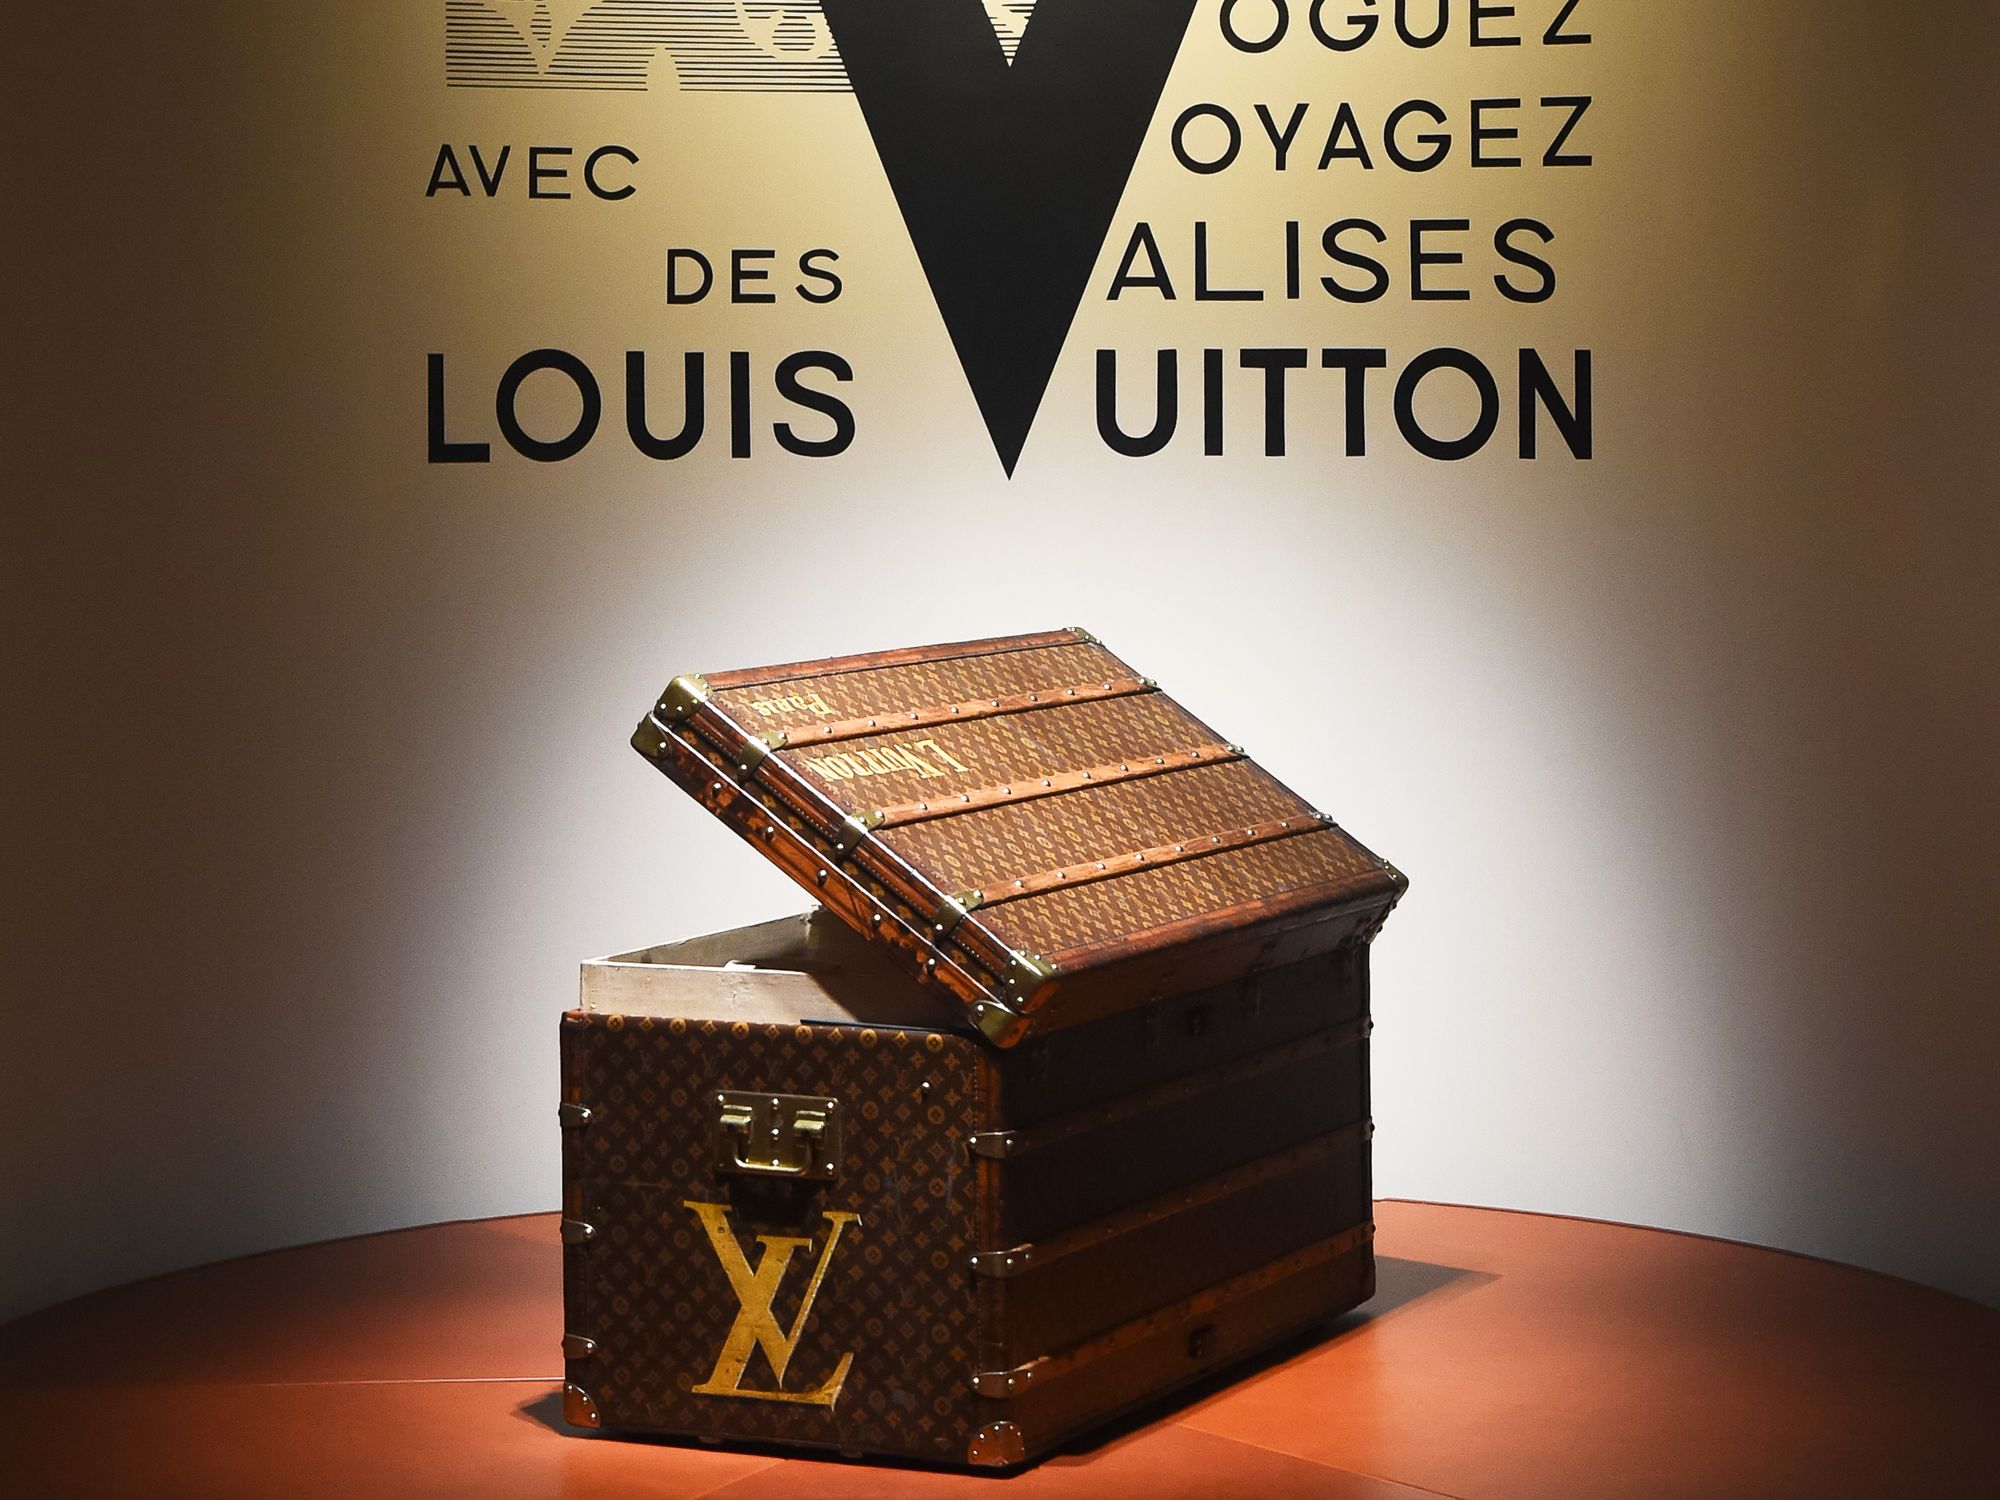 Volez, Voguez, Voyagez! Louis Vuitton Celebrates Olivier Saillard-Curated  Exhibit - Daily Front Row